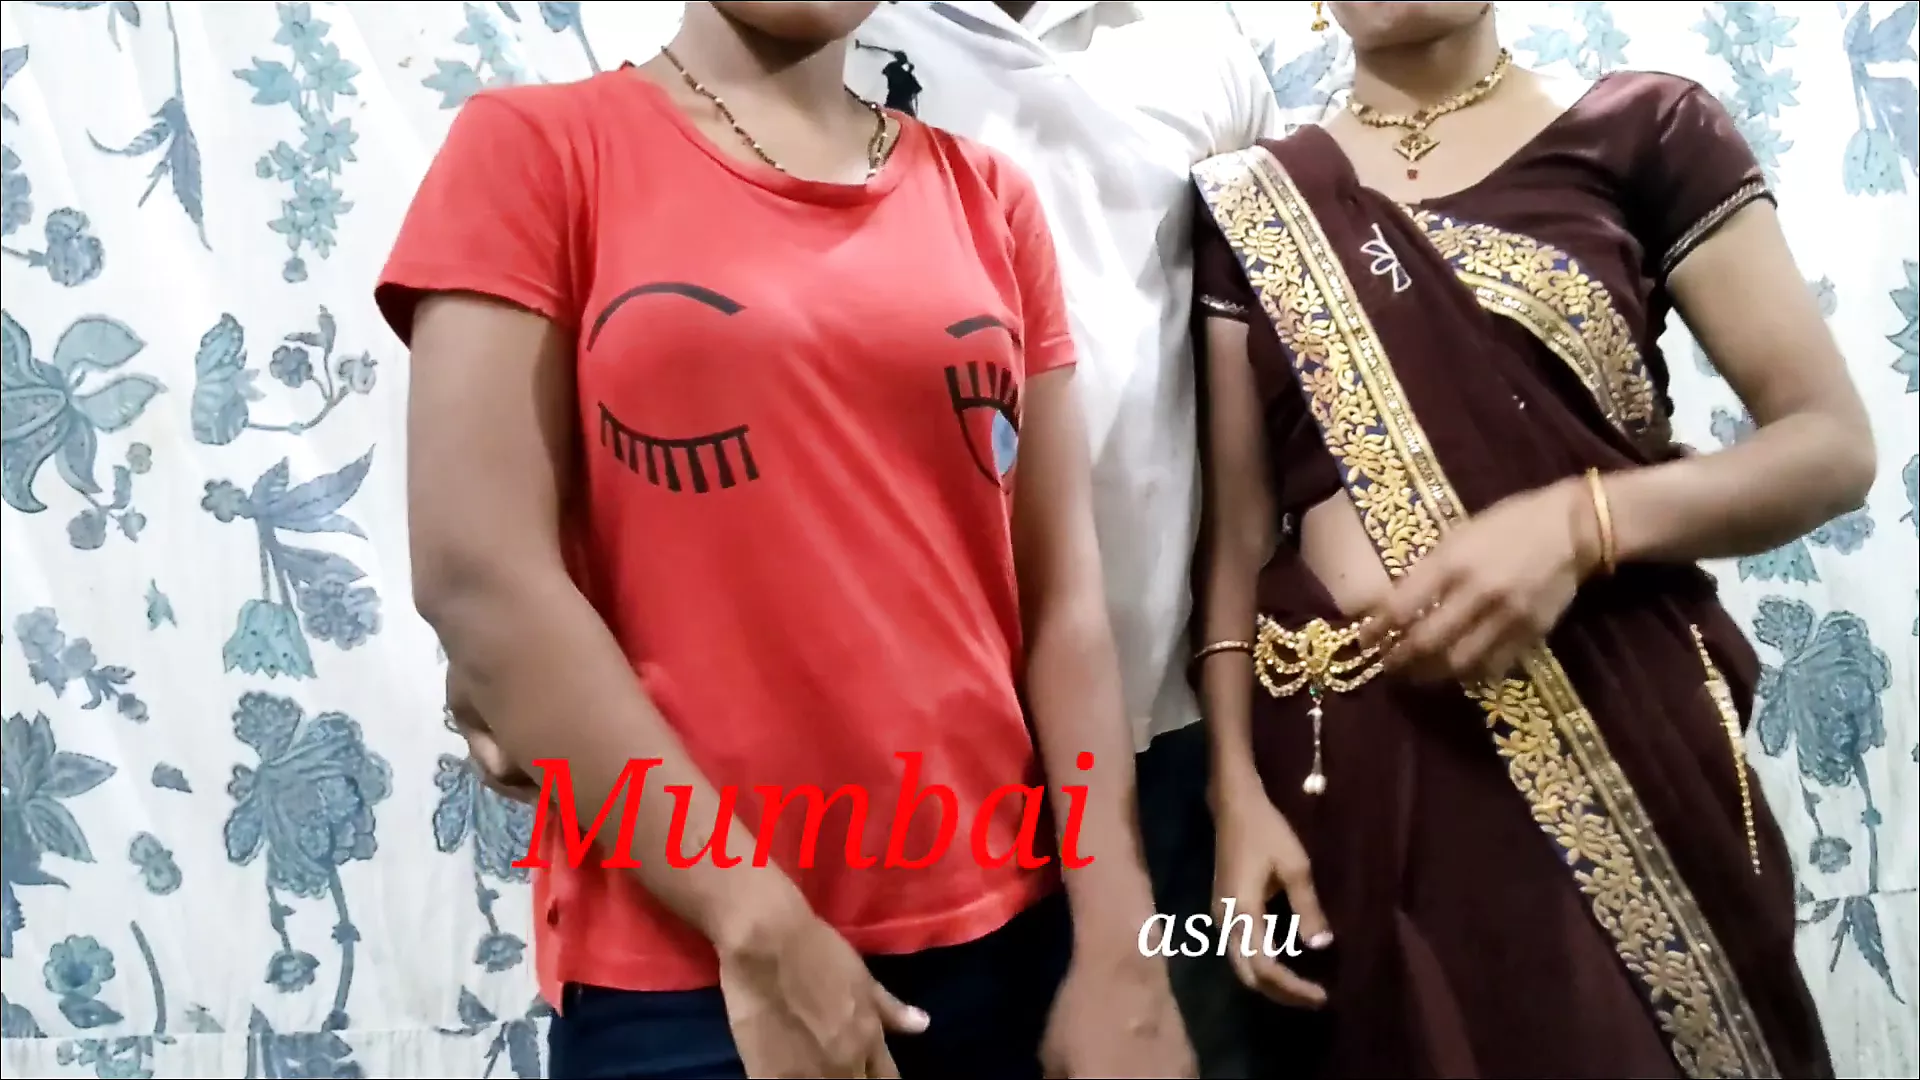 Mumbai Sex Video With Audio - Indian Threesome Video Mumbai Ashu Sex Video Anal Sex | xHamster